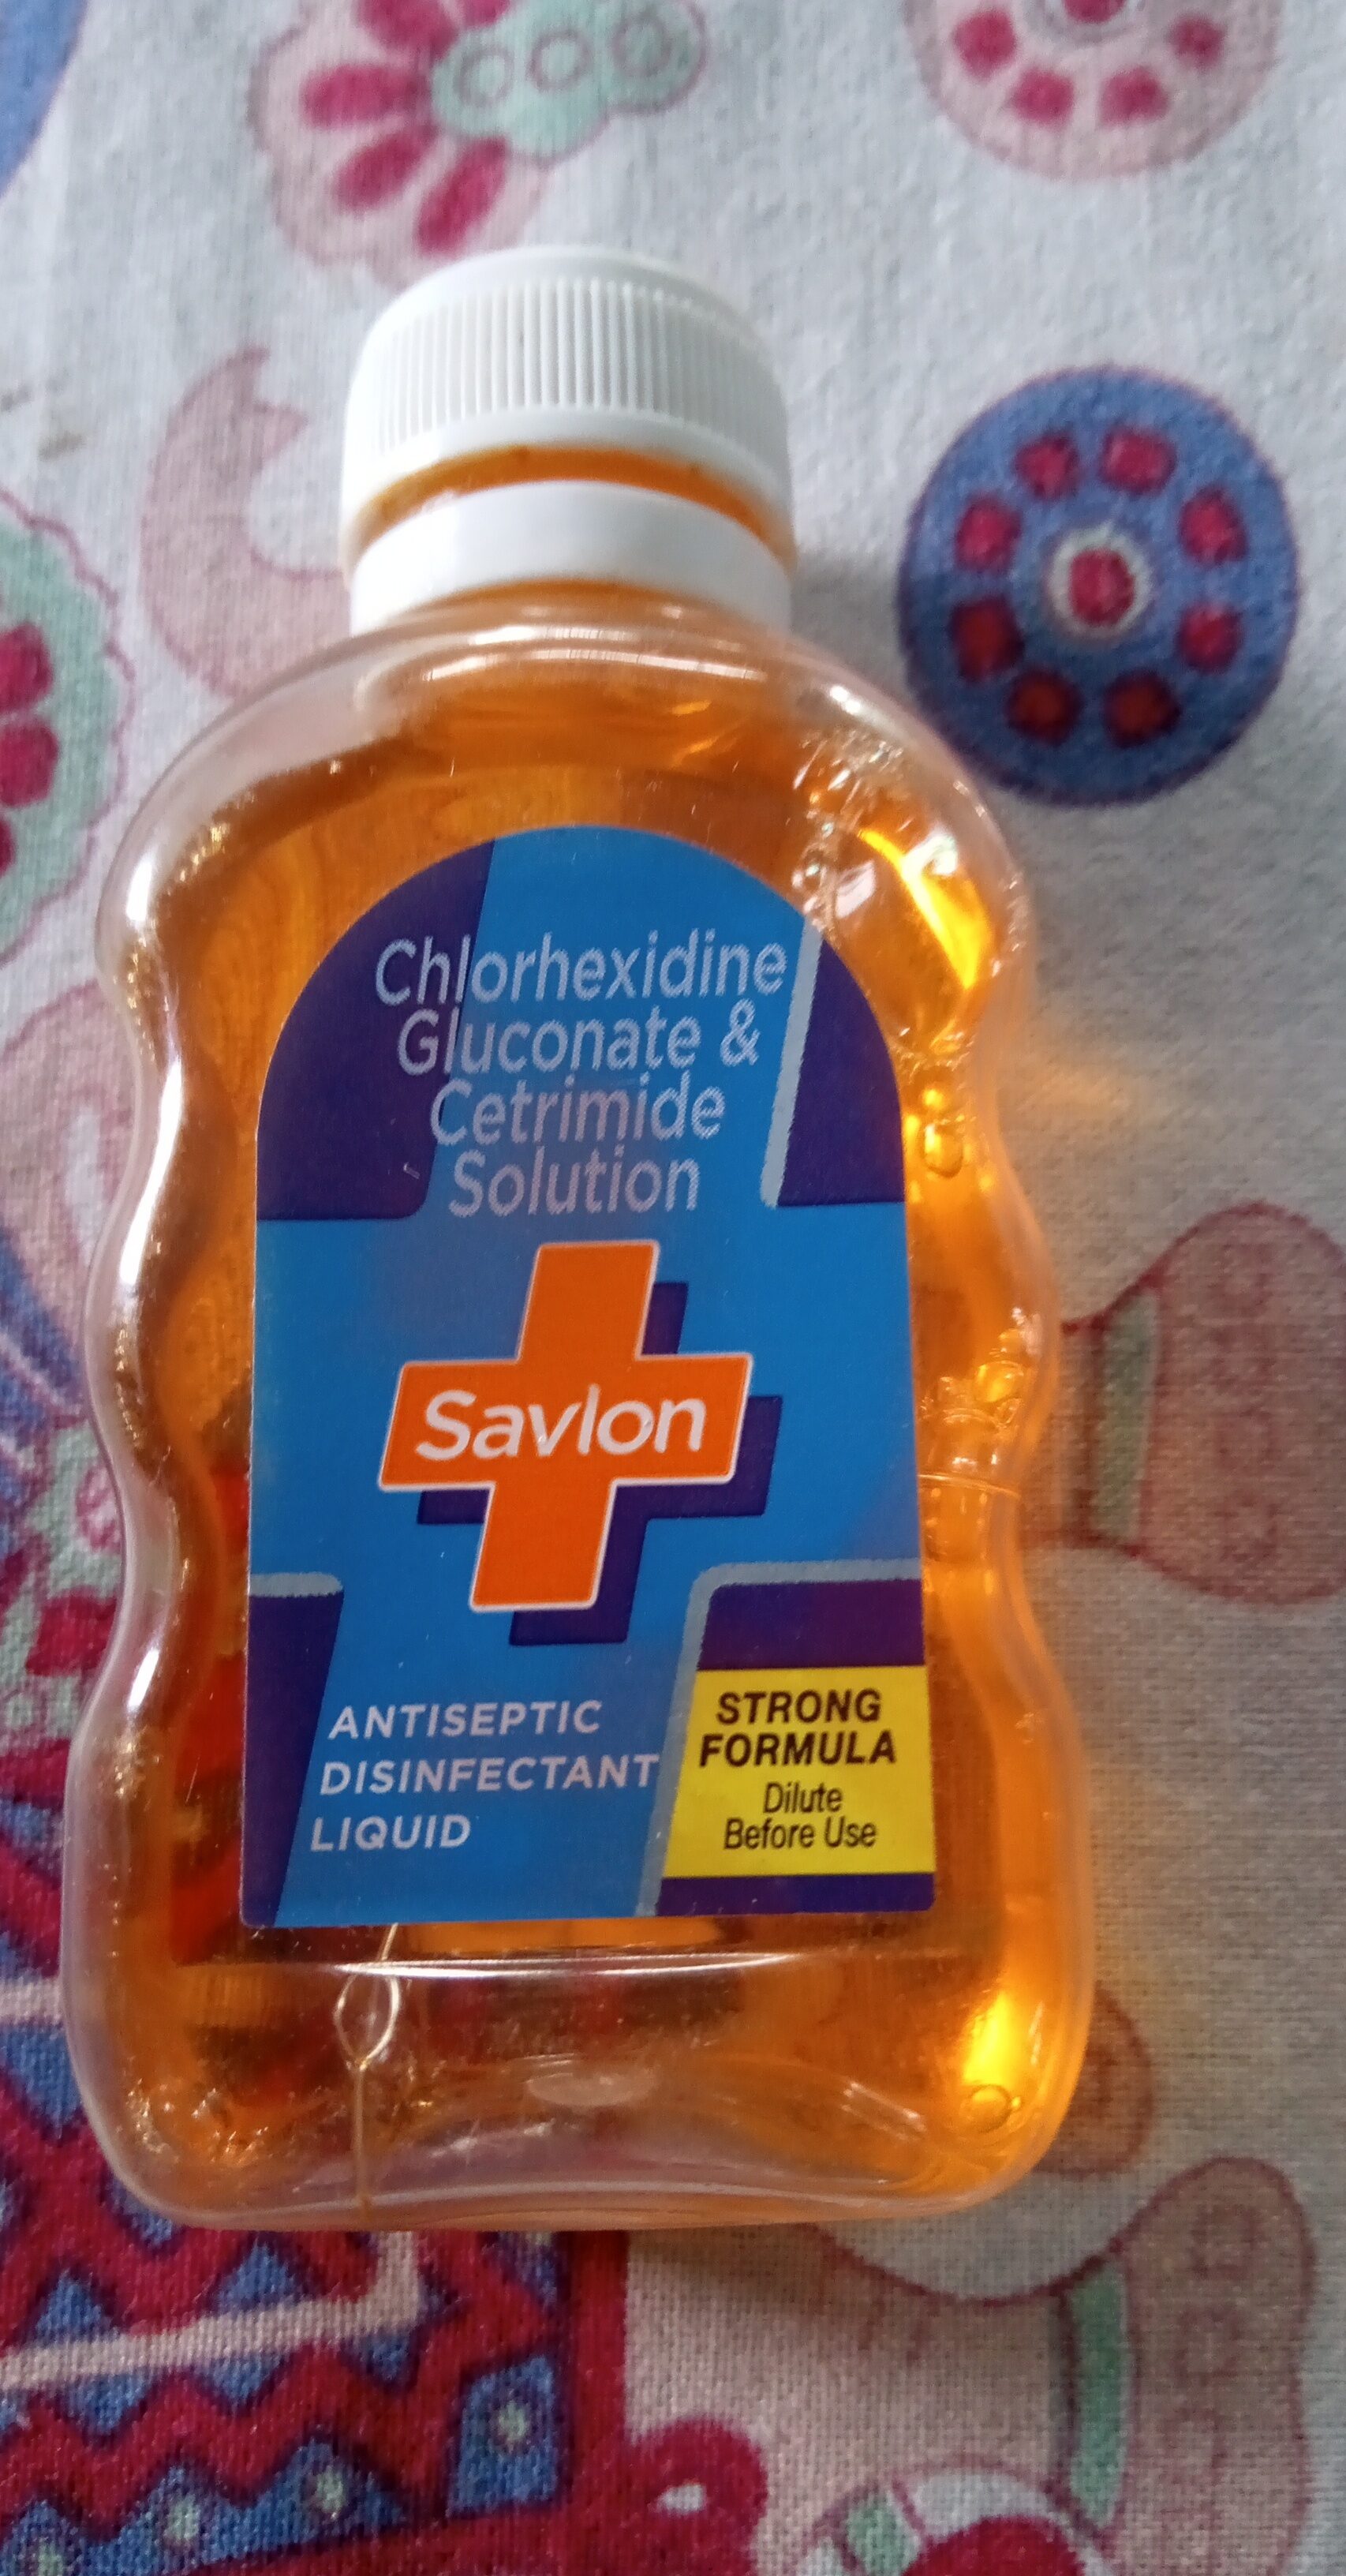 Savlon antiseptic liquid - Product - en